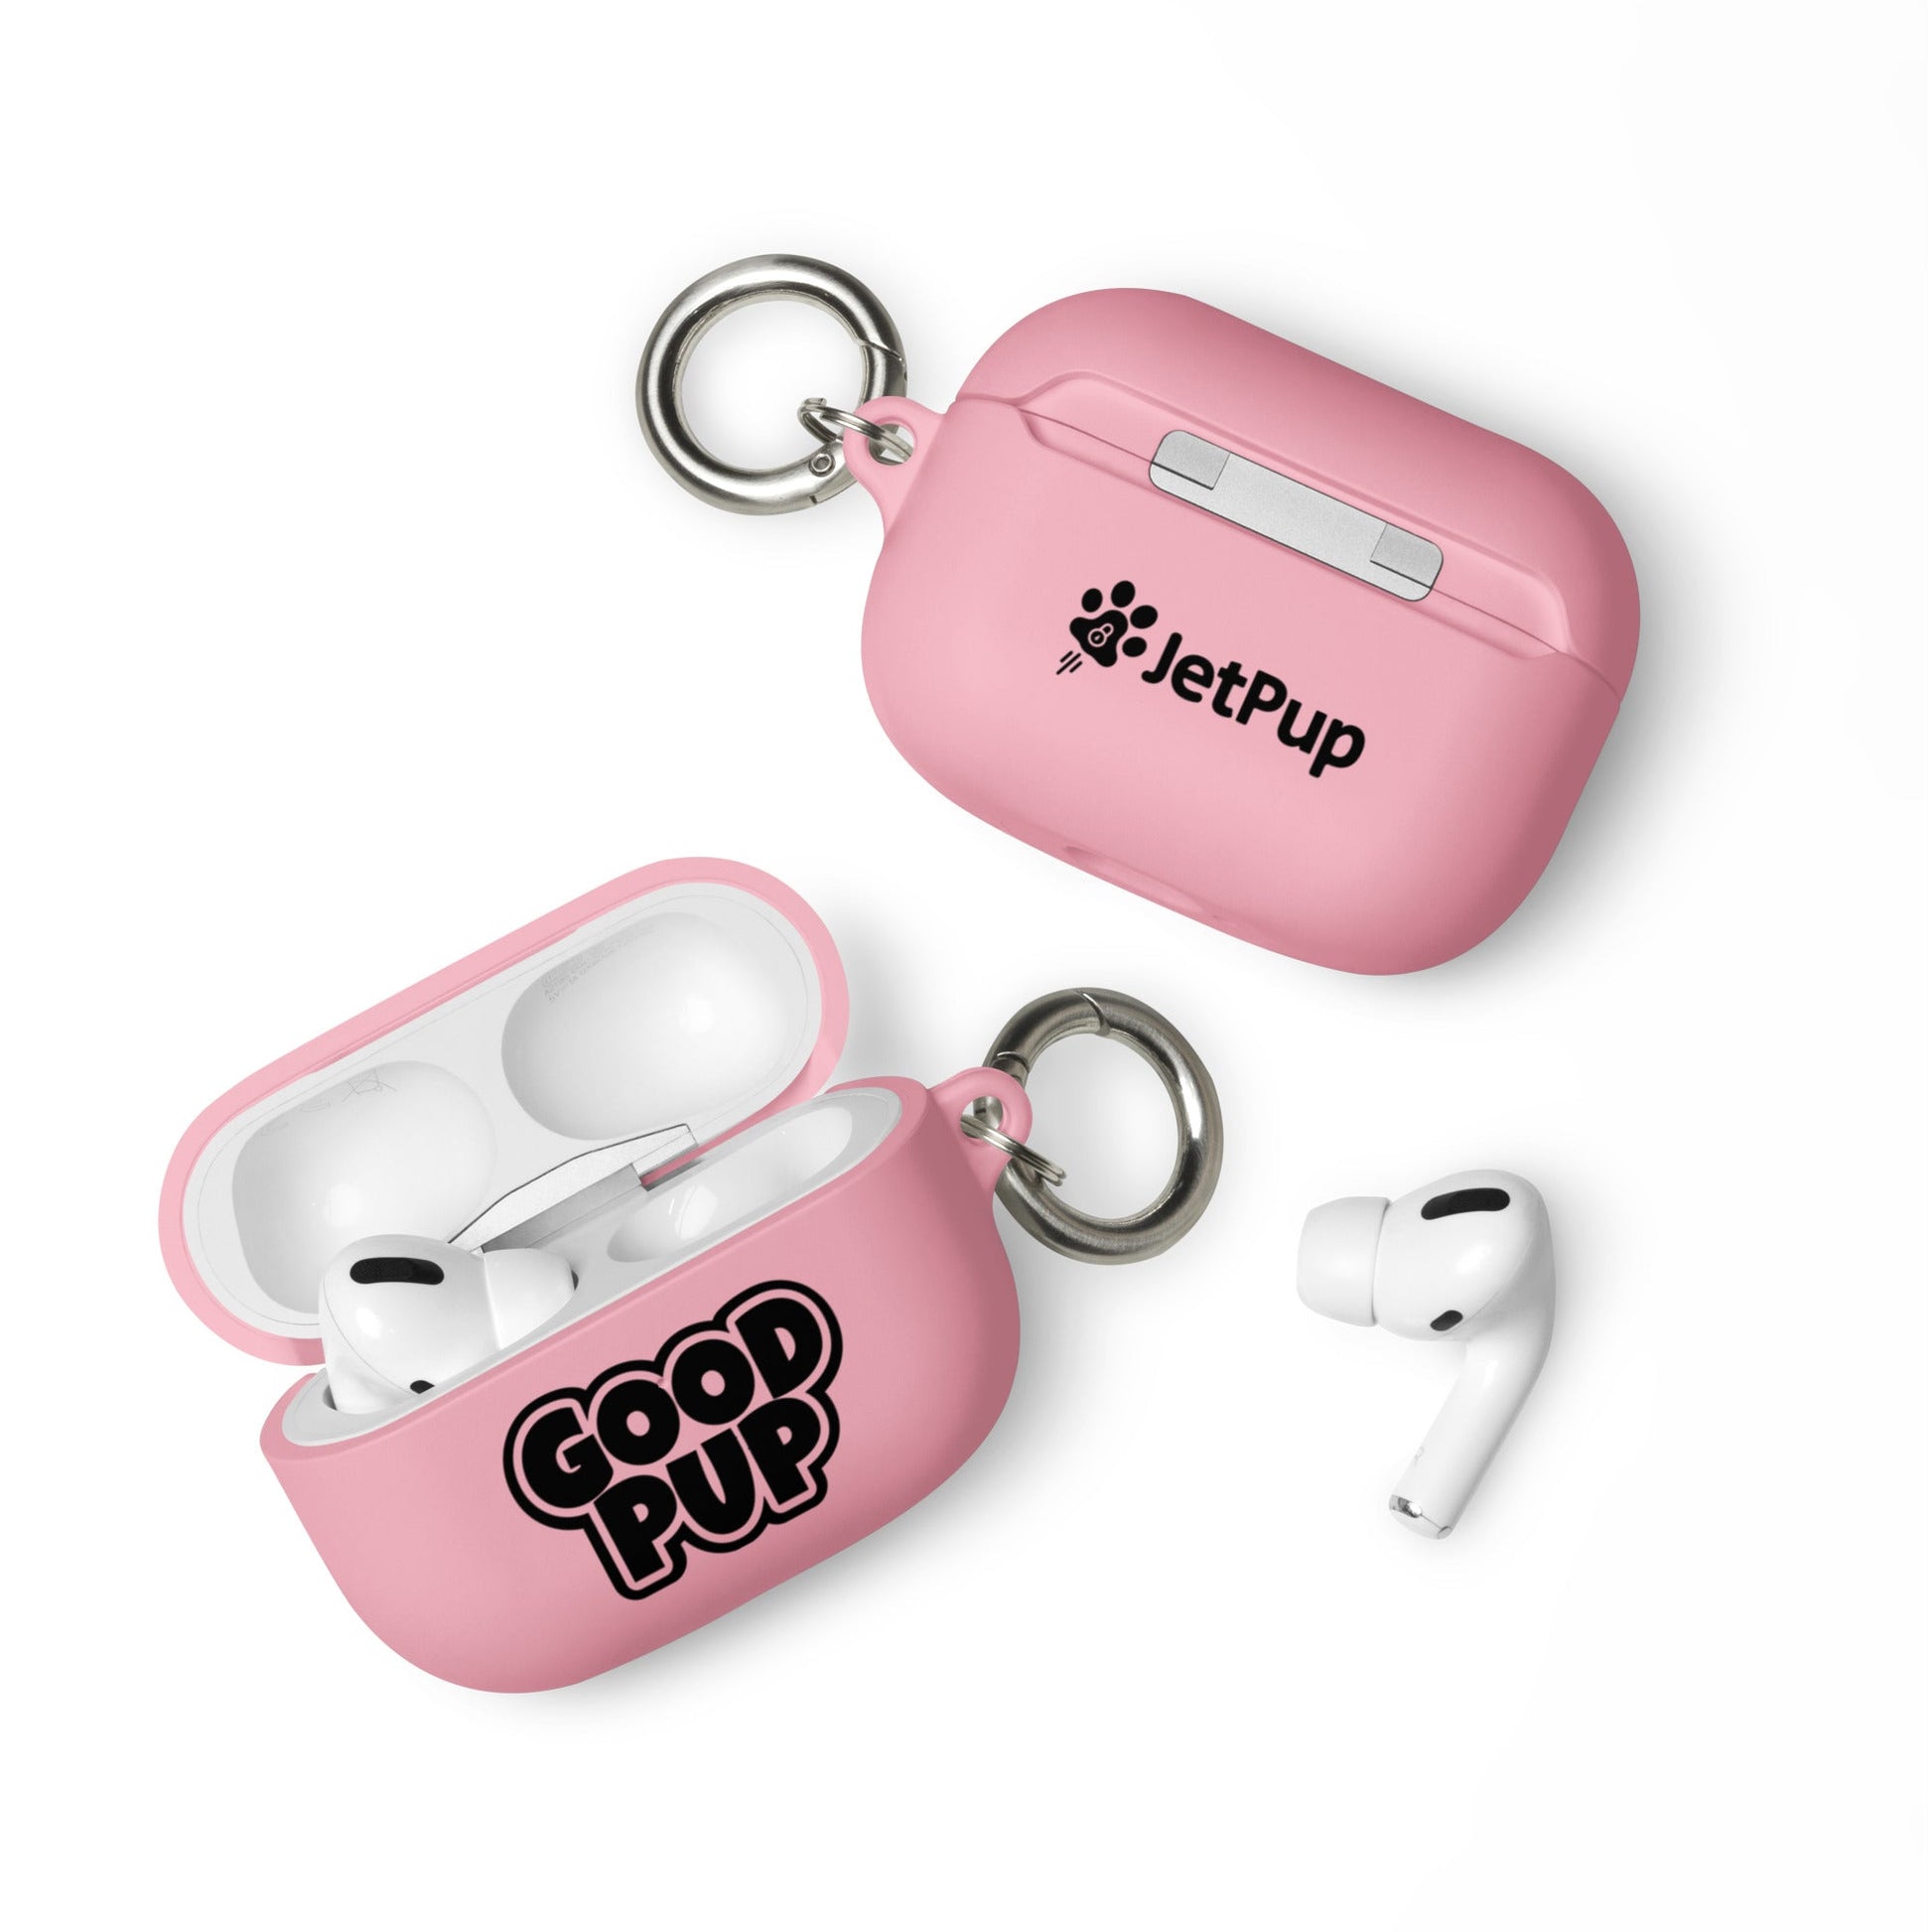 Good Pup AirPods Case - Pink - JetPup